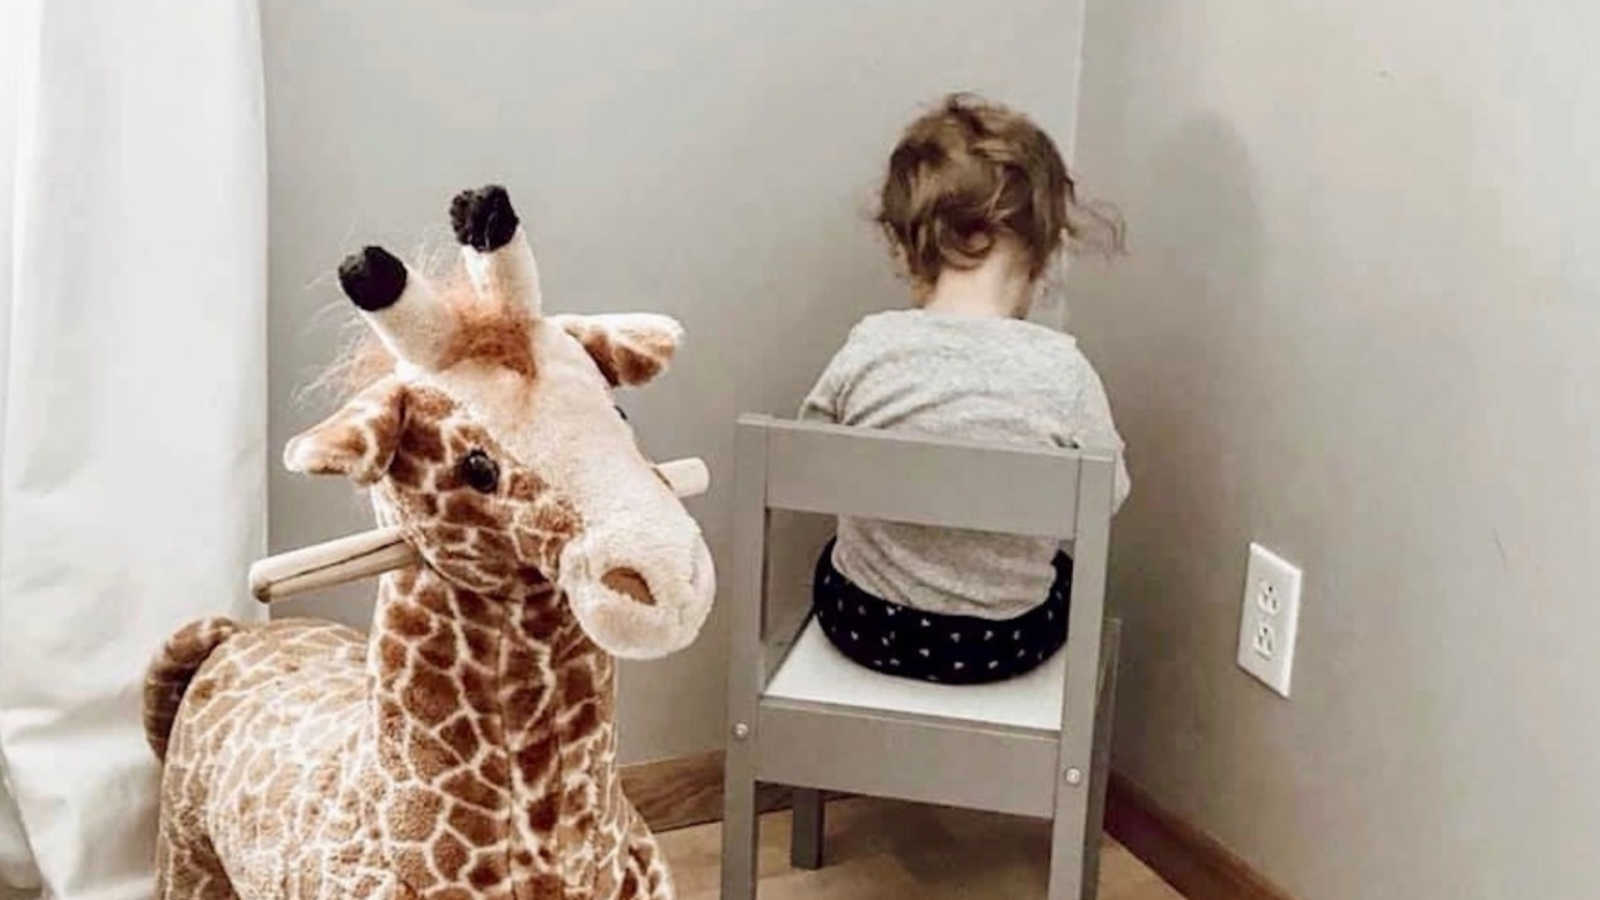 child sitting in timeout next to stuffed giraffe